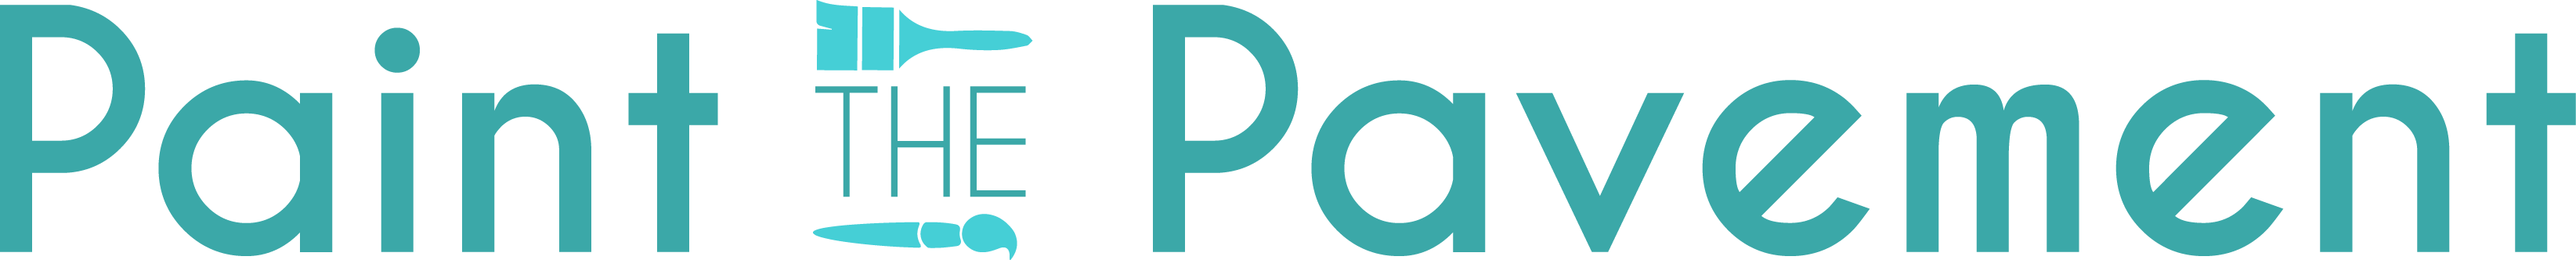 Paint the Pavement logo